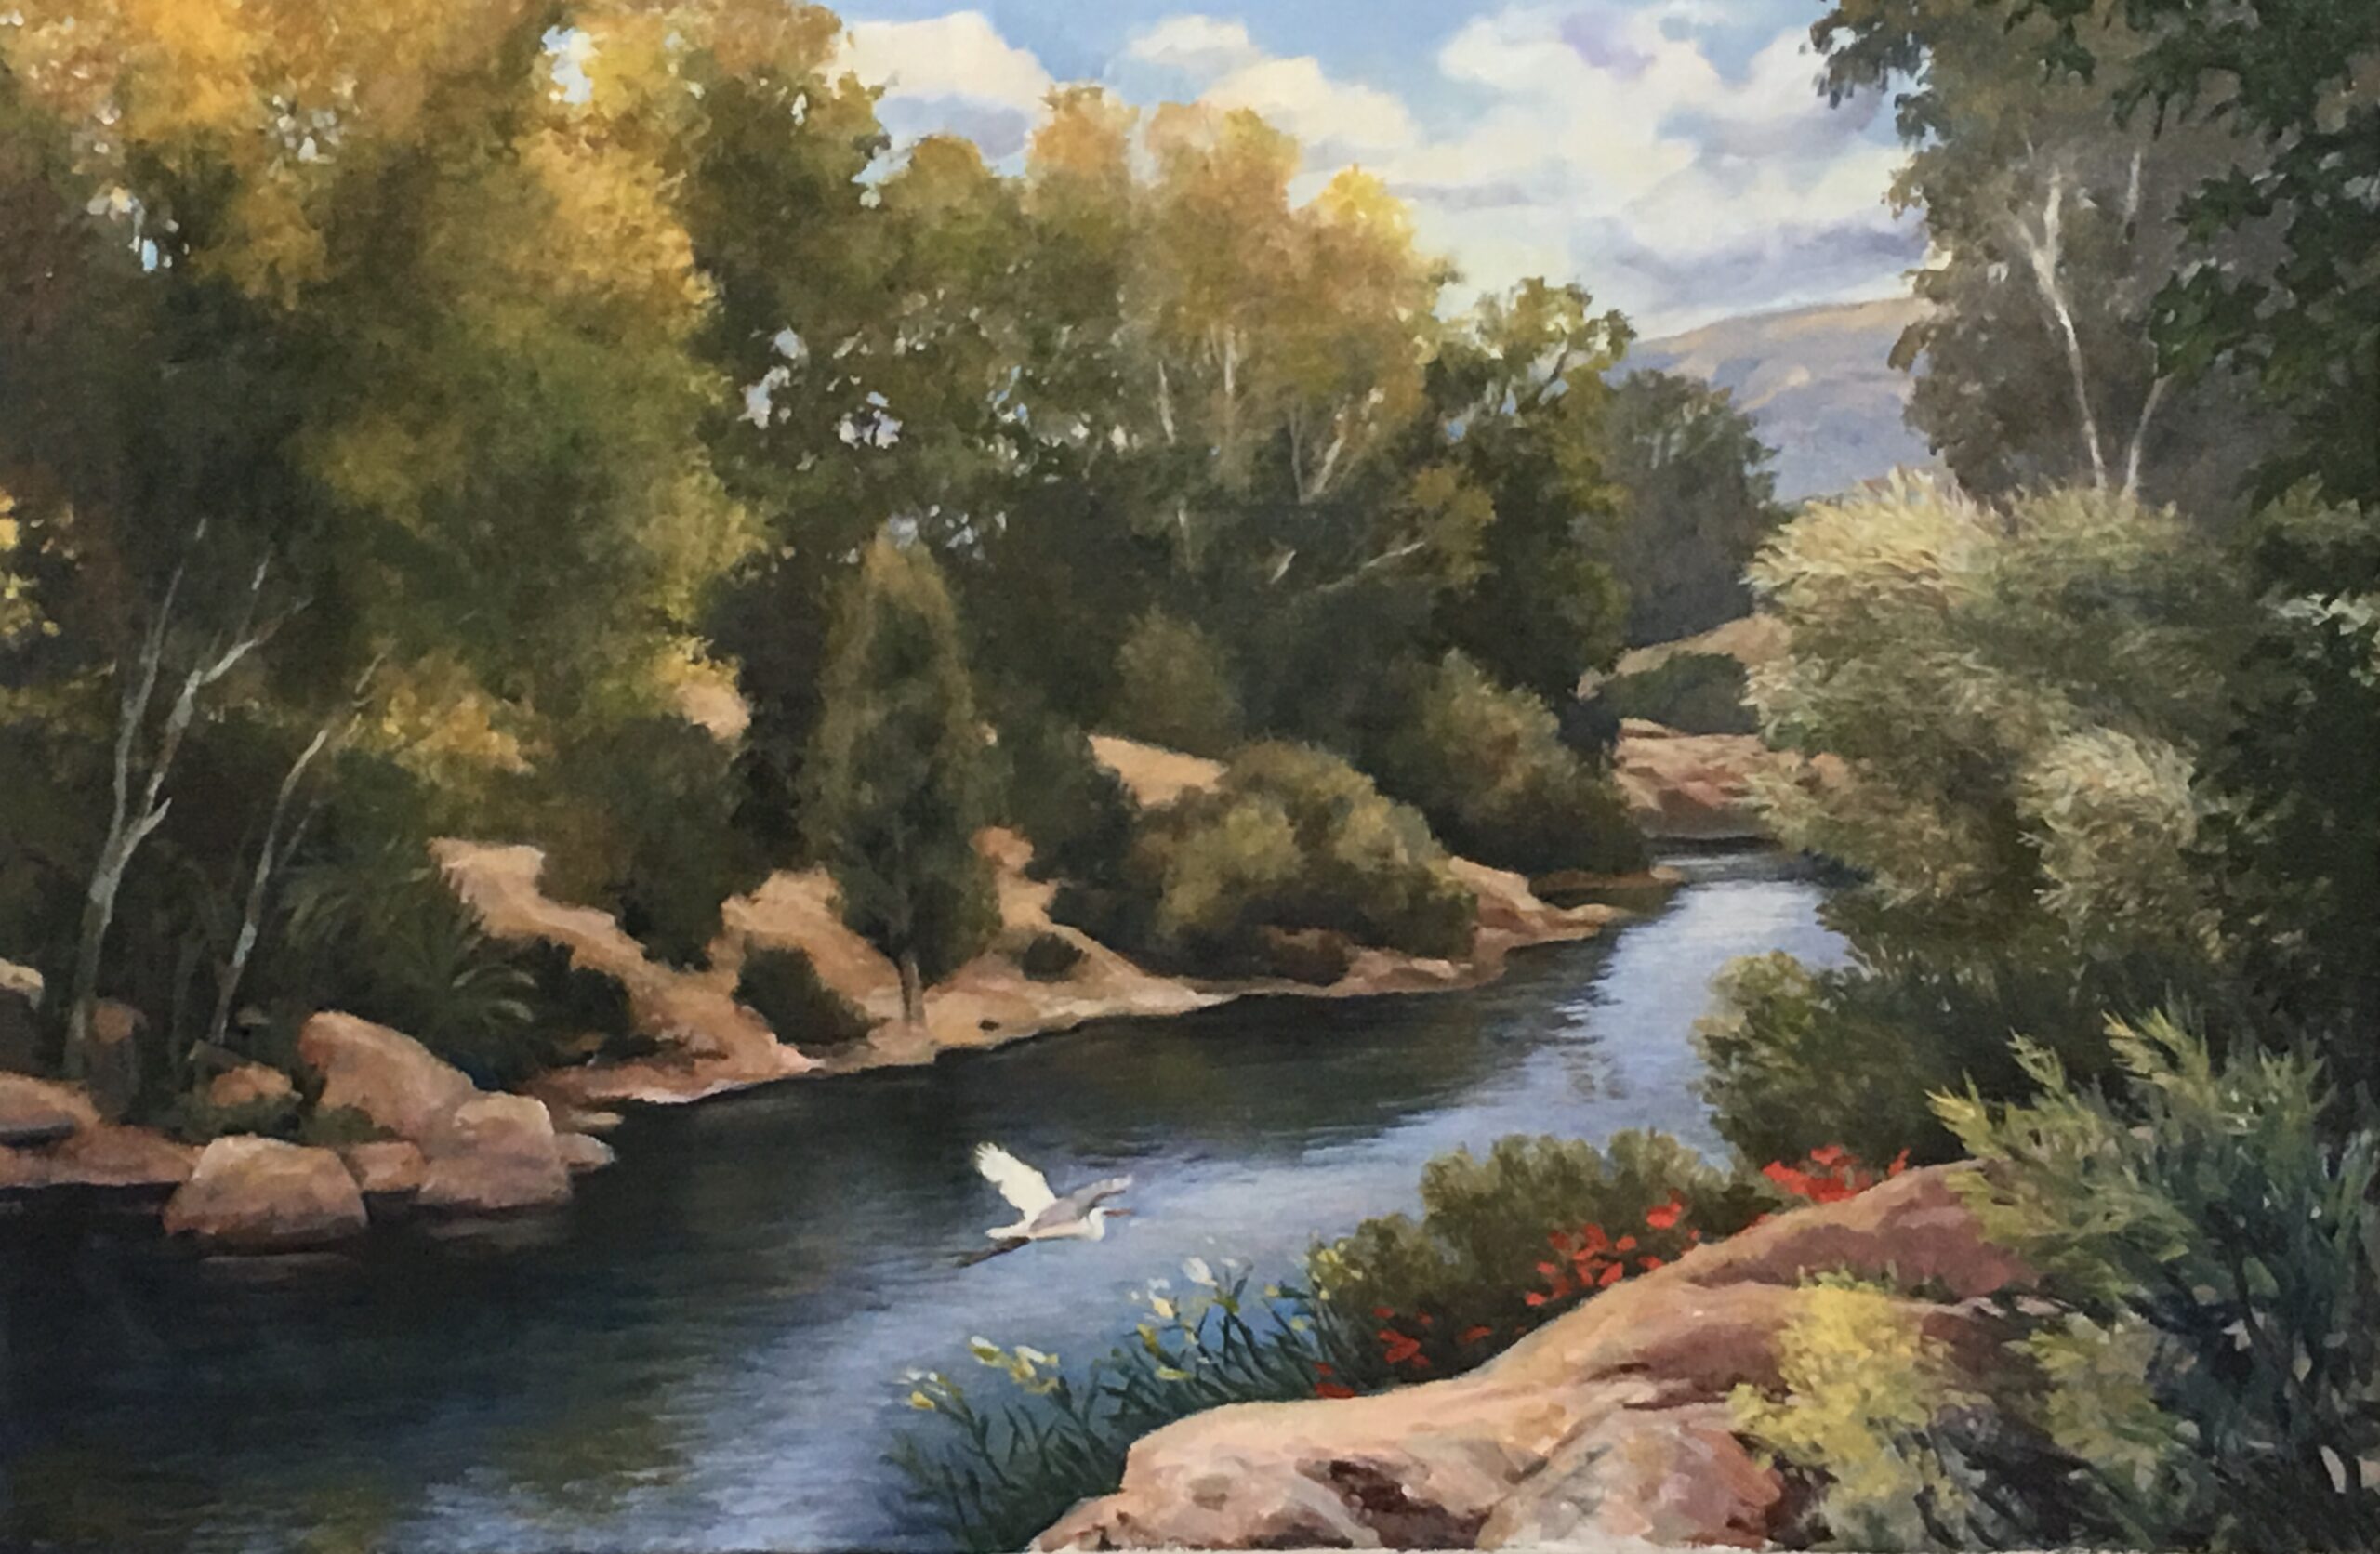 Baptism of Christ & Jordan River – Triptych